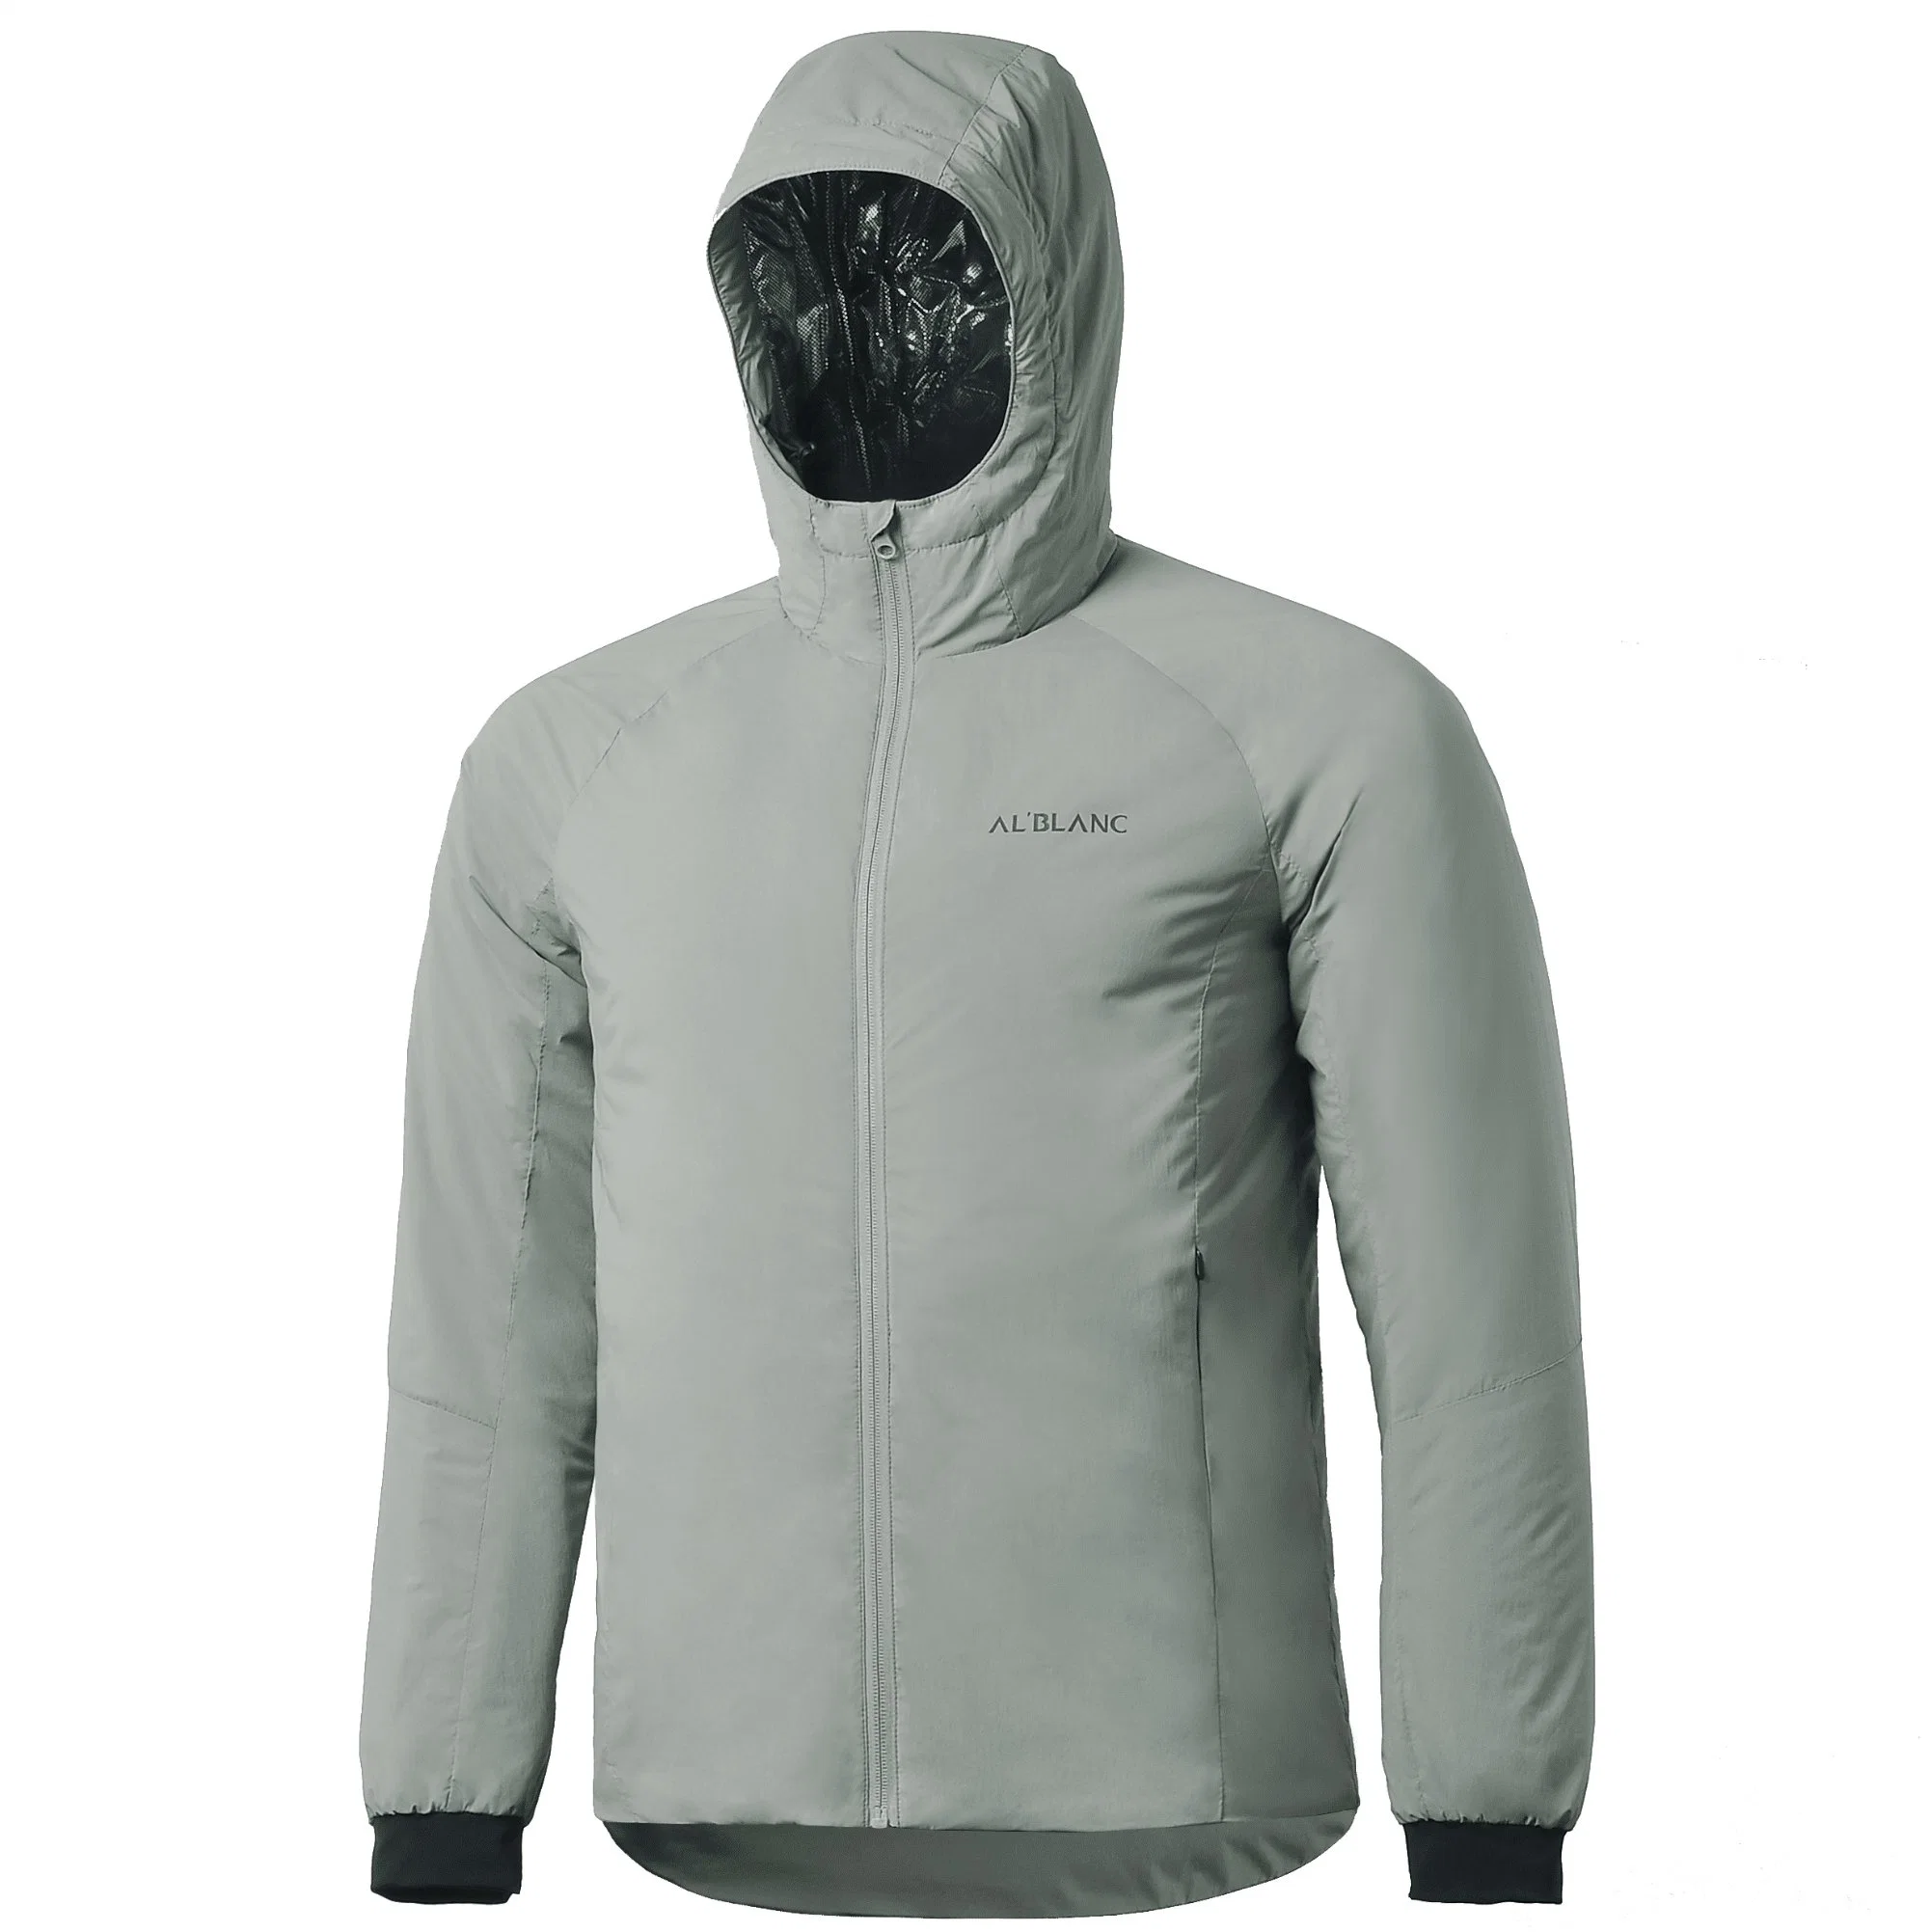 Factory Fashion Outdoor Waterproof Windproof Warm Winter Men Padding Sportswear Jacket with Attached Hood